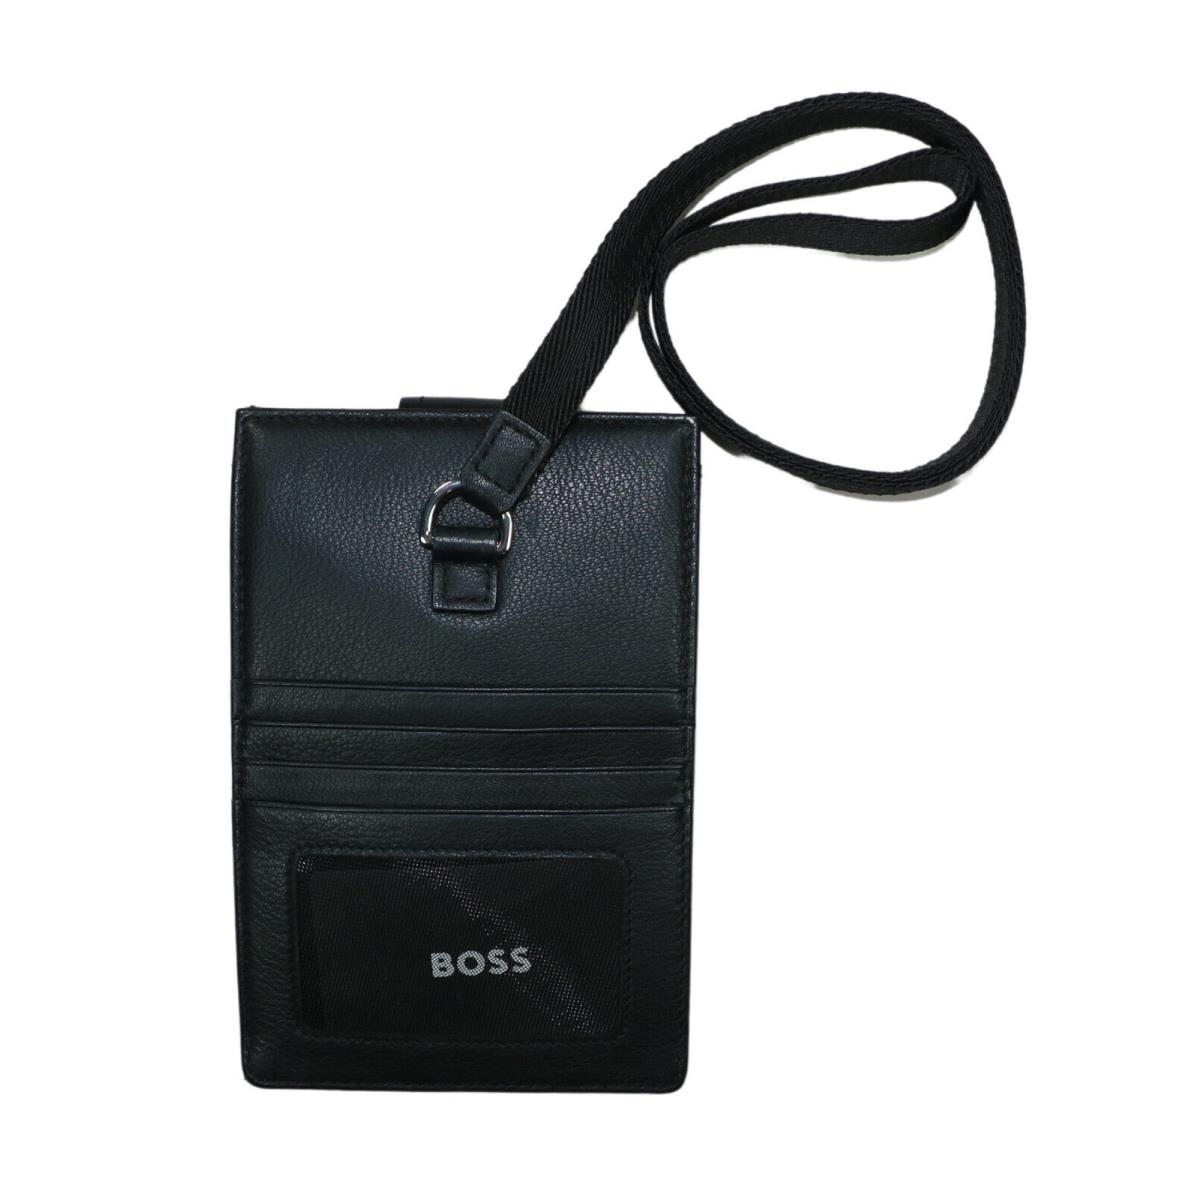 Hugo Boss Black Label Leather Phone Case Wallet W/strap